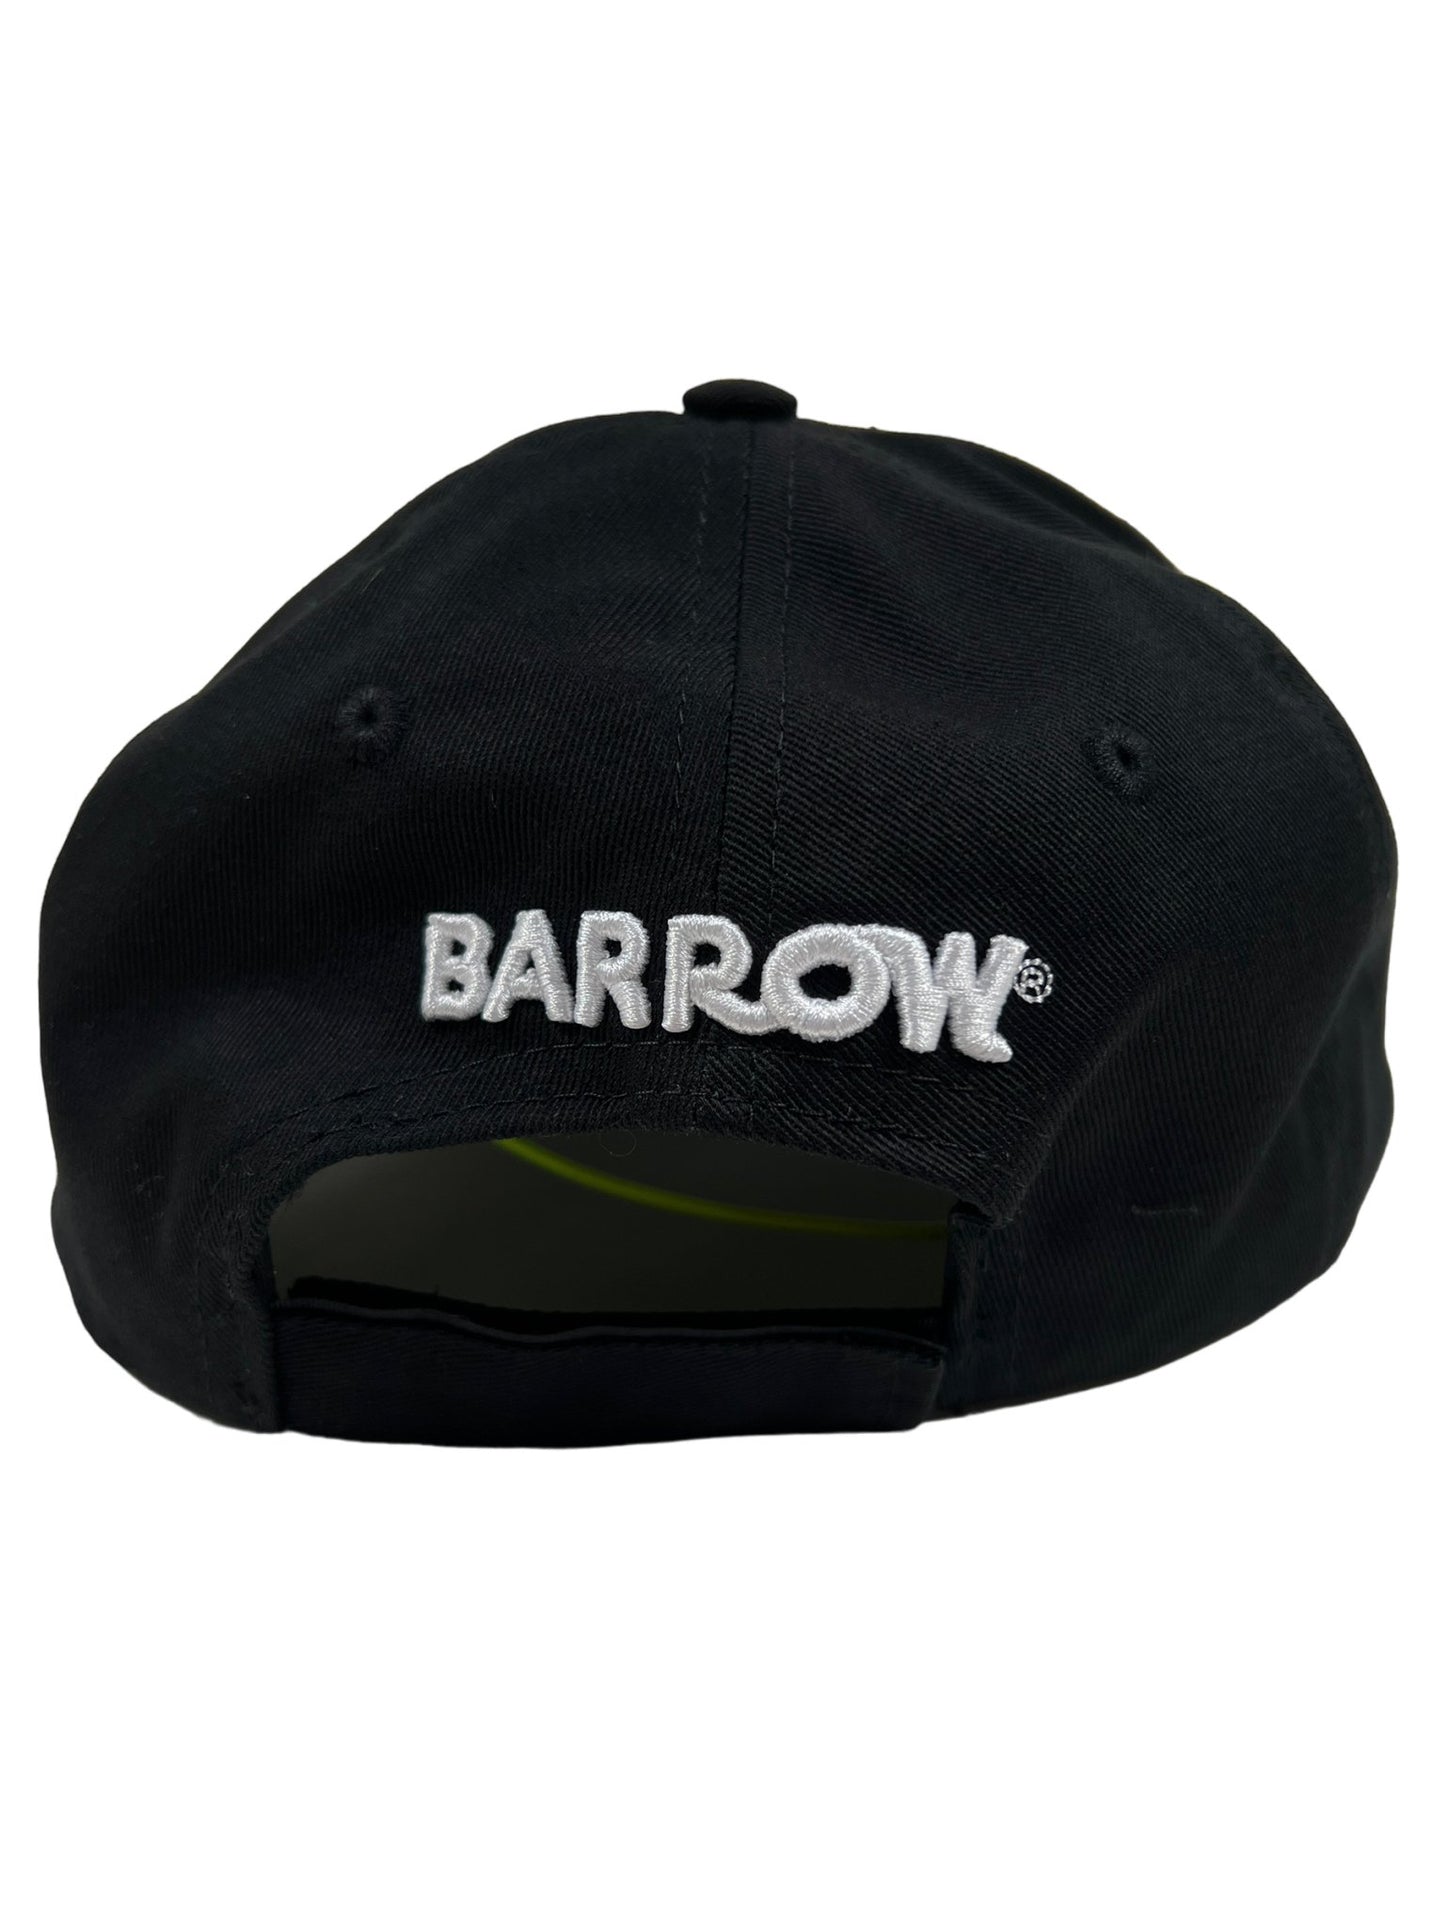 BARROW S4BWUABC003 BASEBALL CAP UNISEX